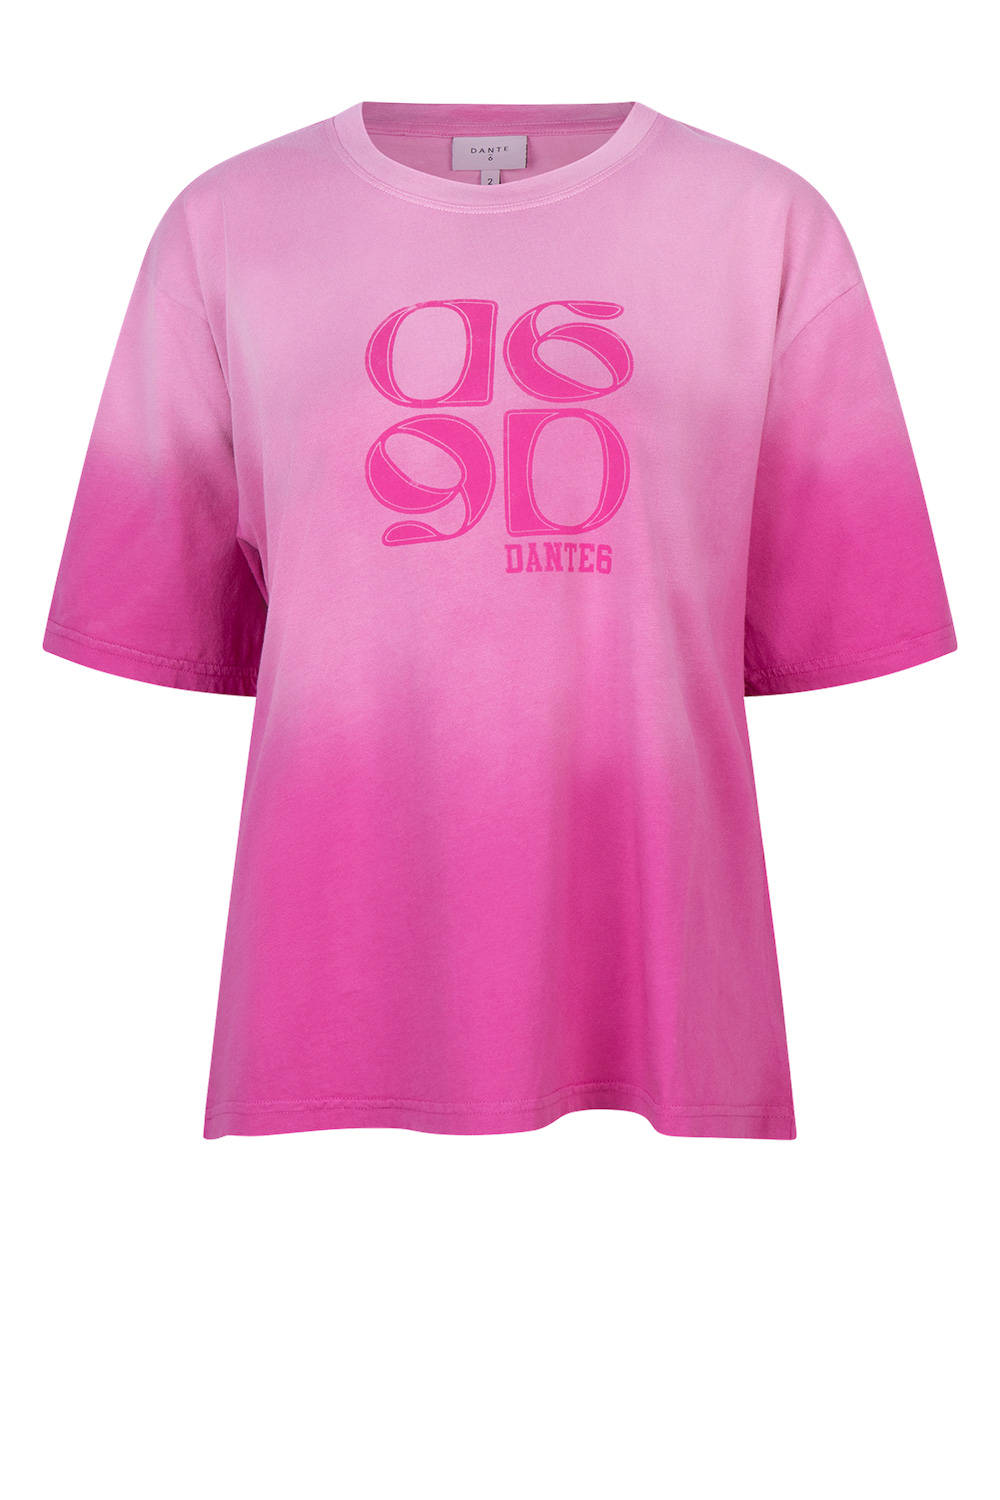 Dante 6 Verwassen t-shirt logo Ashton roze